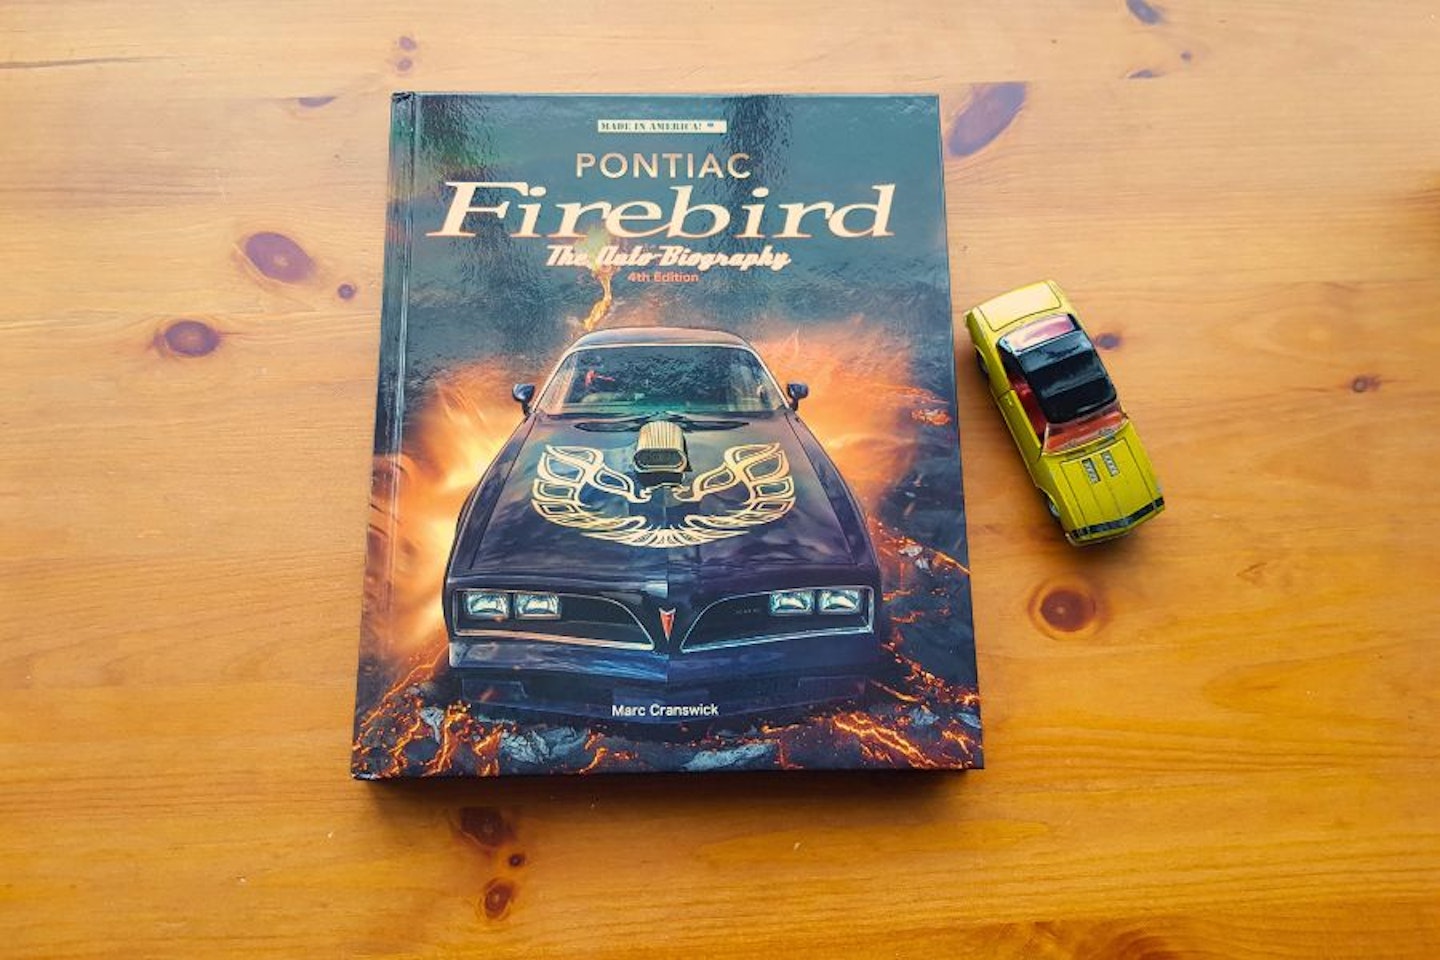 Pontiac Firebird book